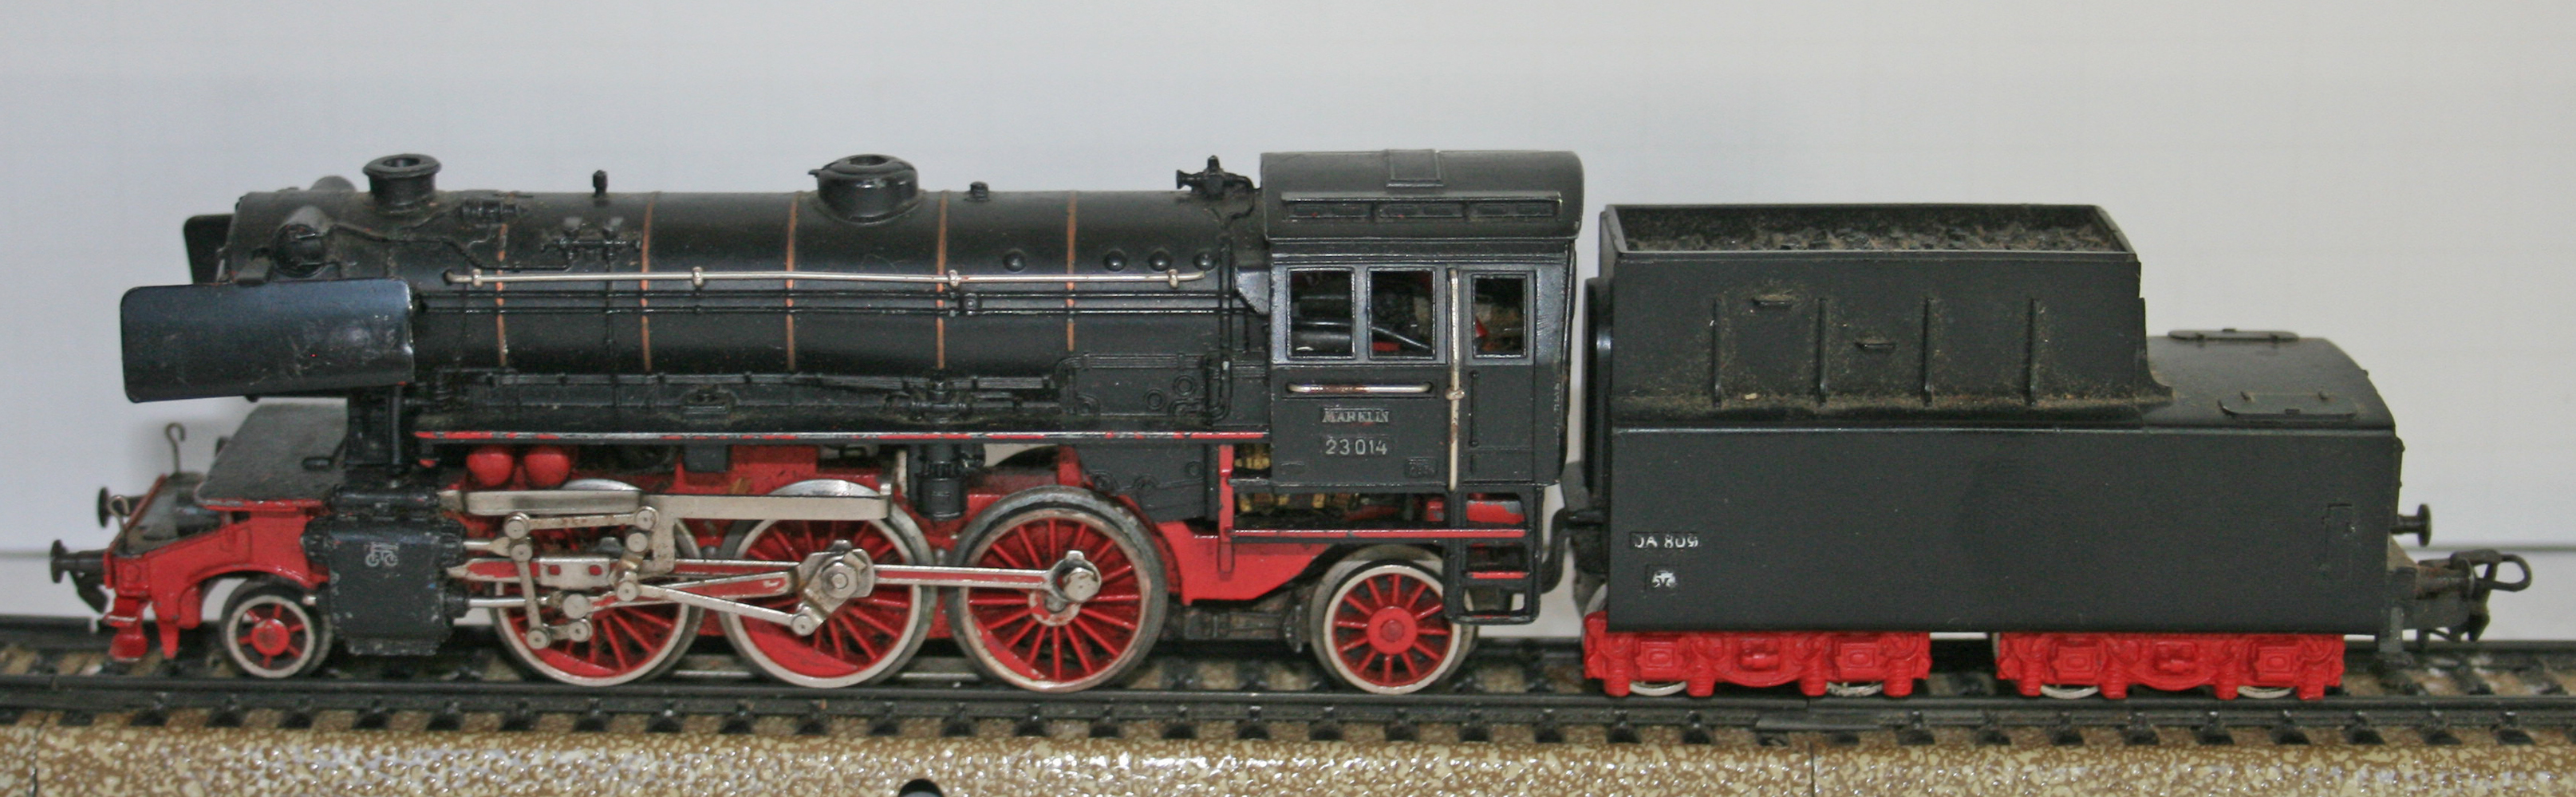 Marklin HO Series Trains (1950-1962)